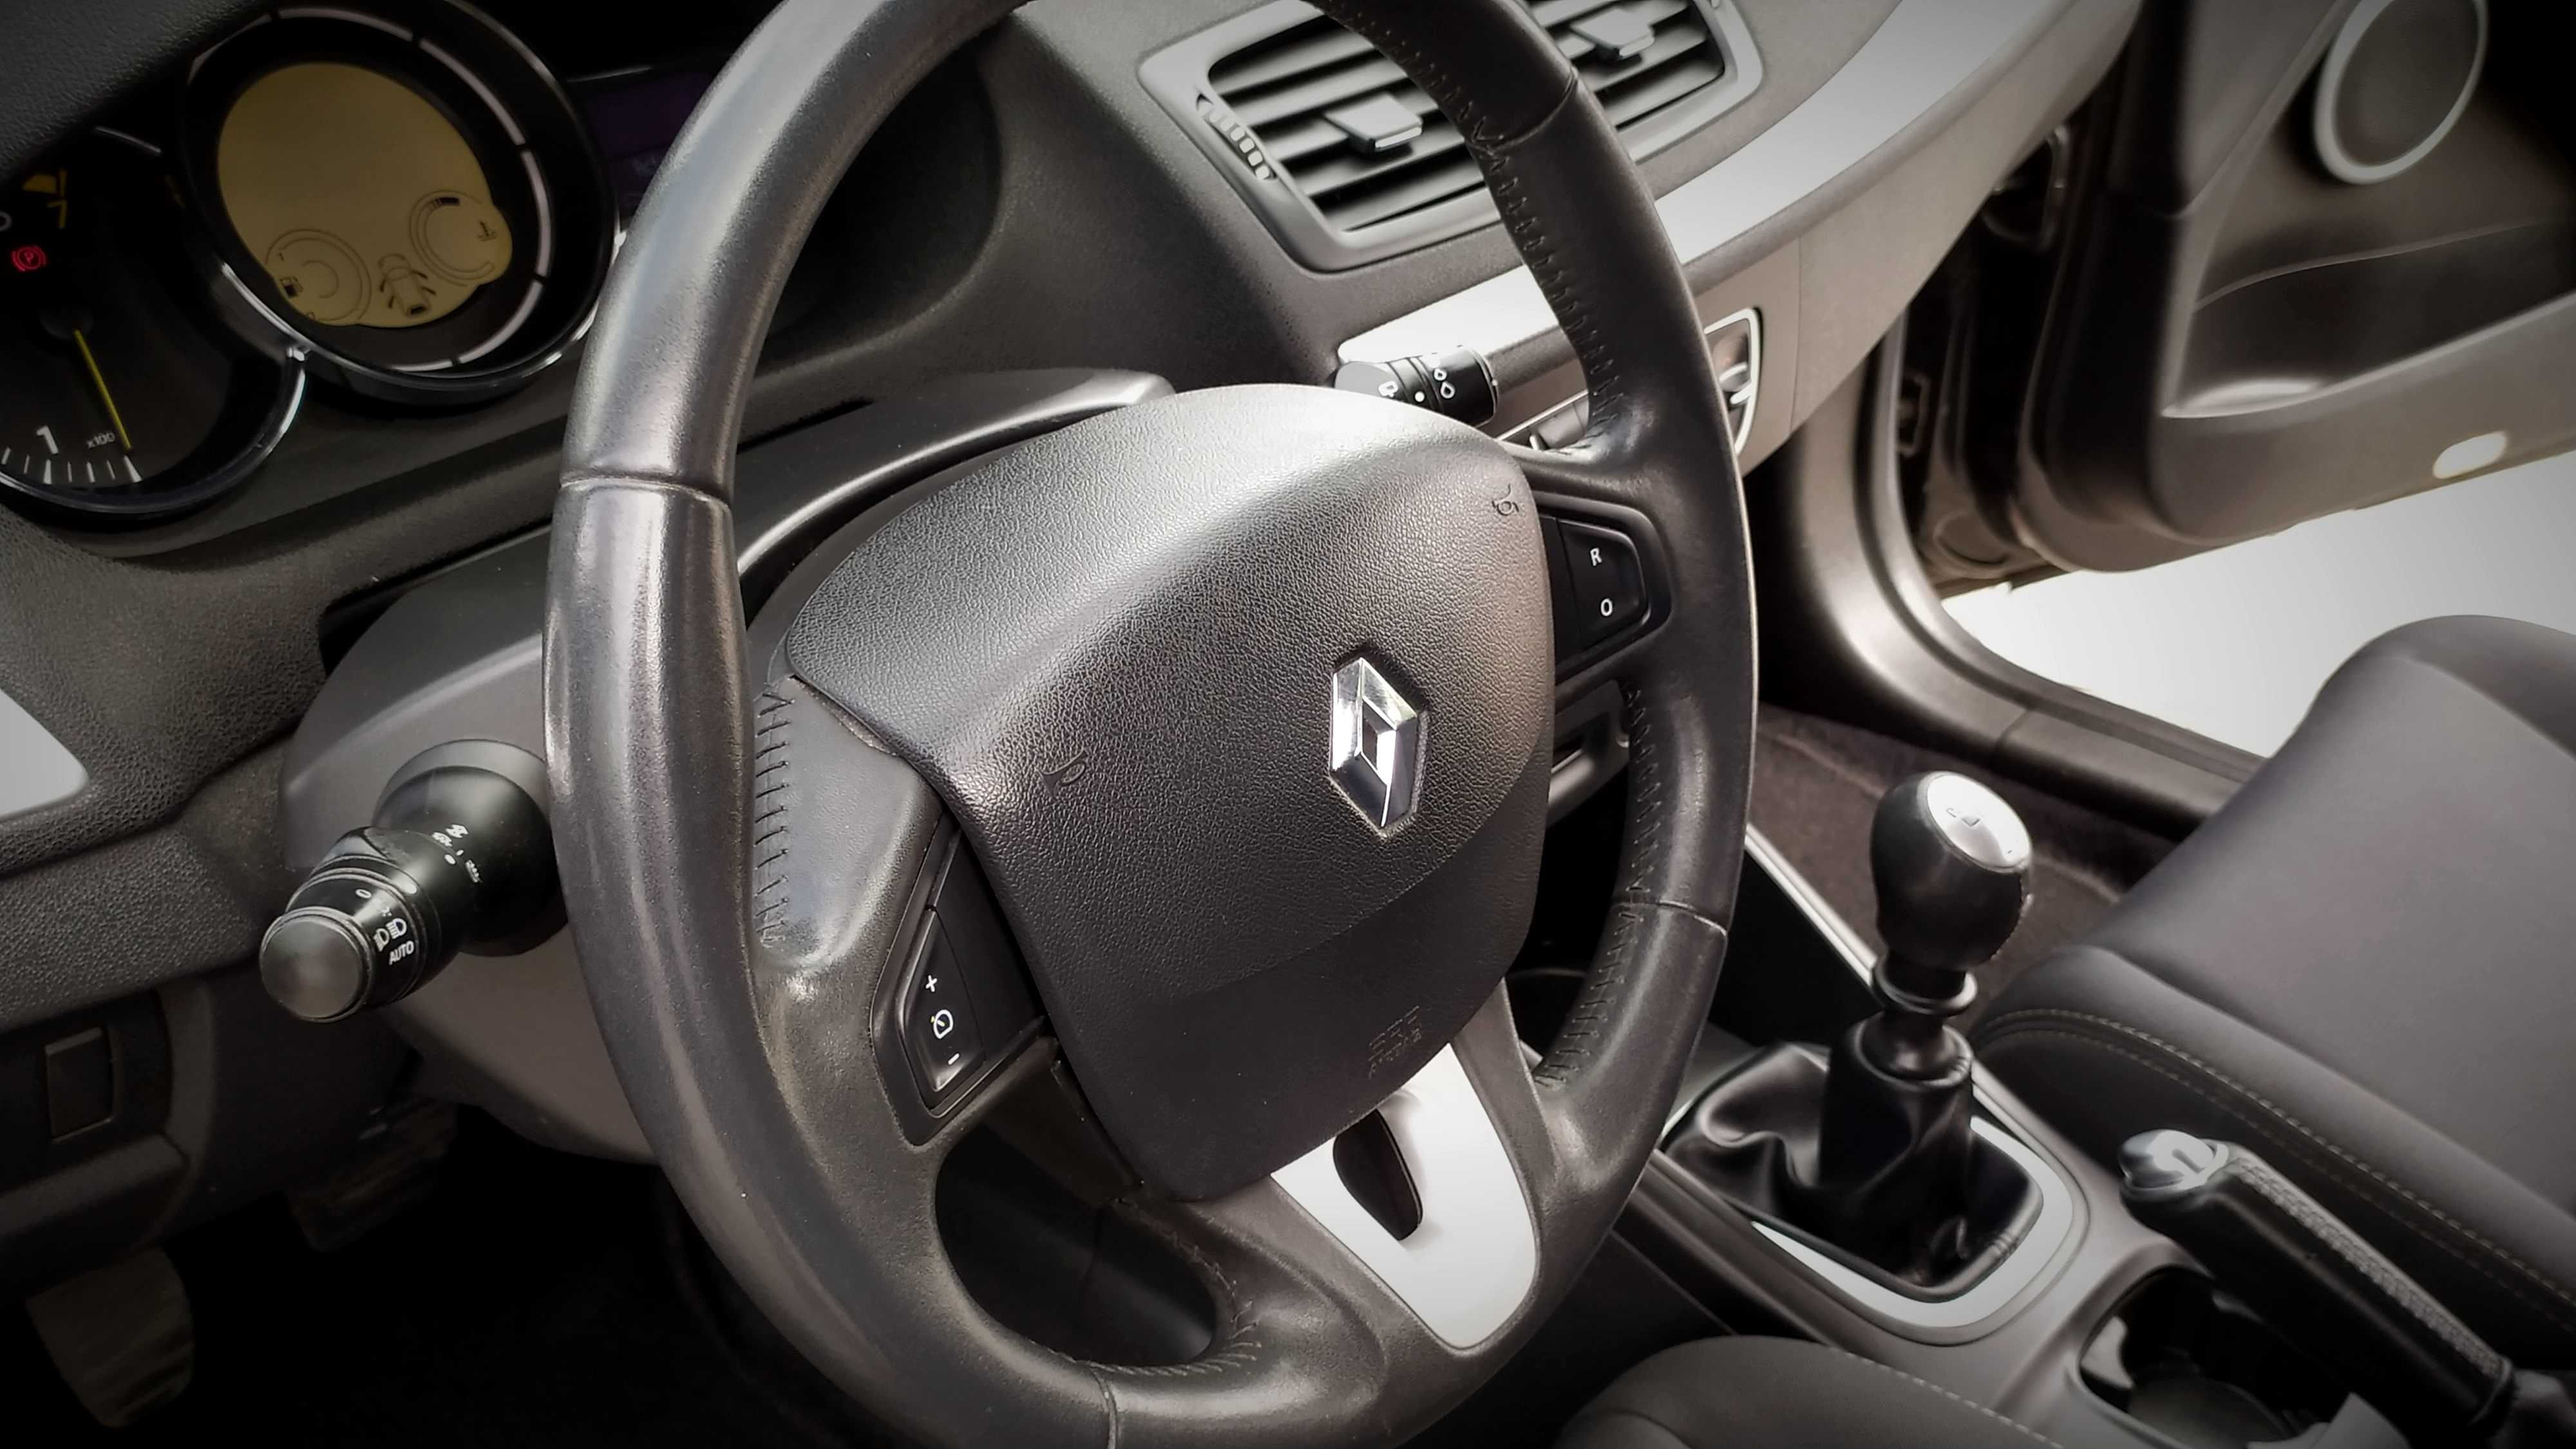 Renault Megane 1,6 Mpi бензин Максимальна комплектація. розмитнений